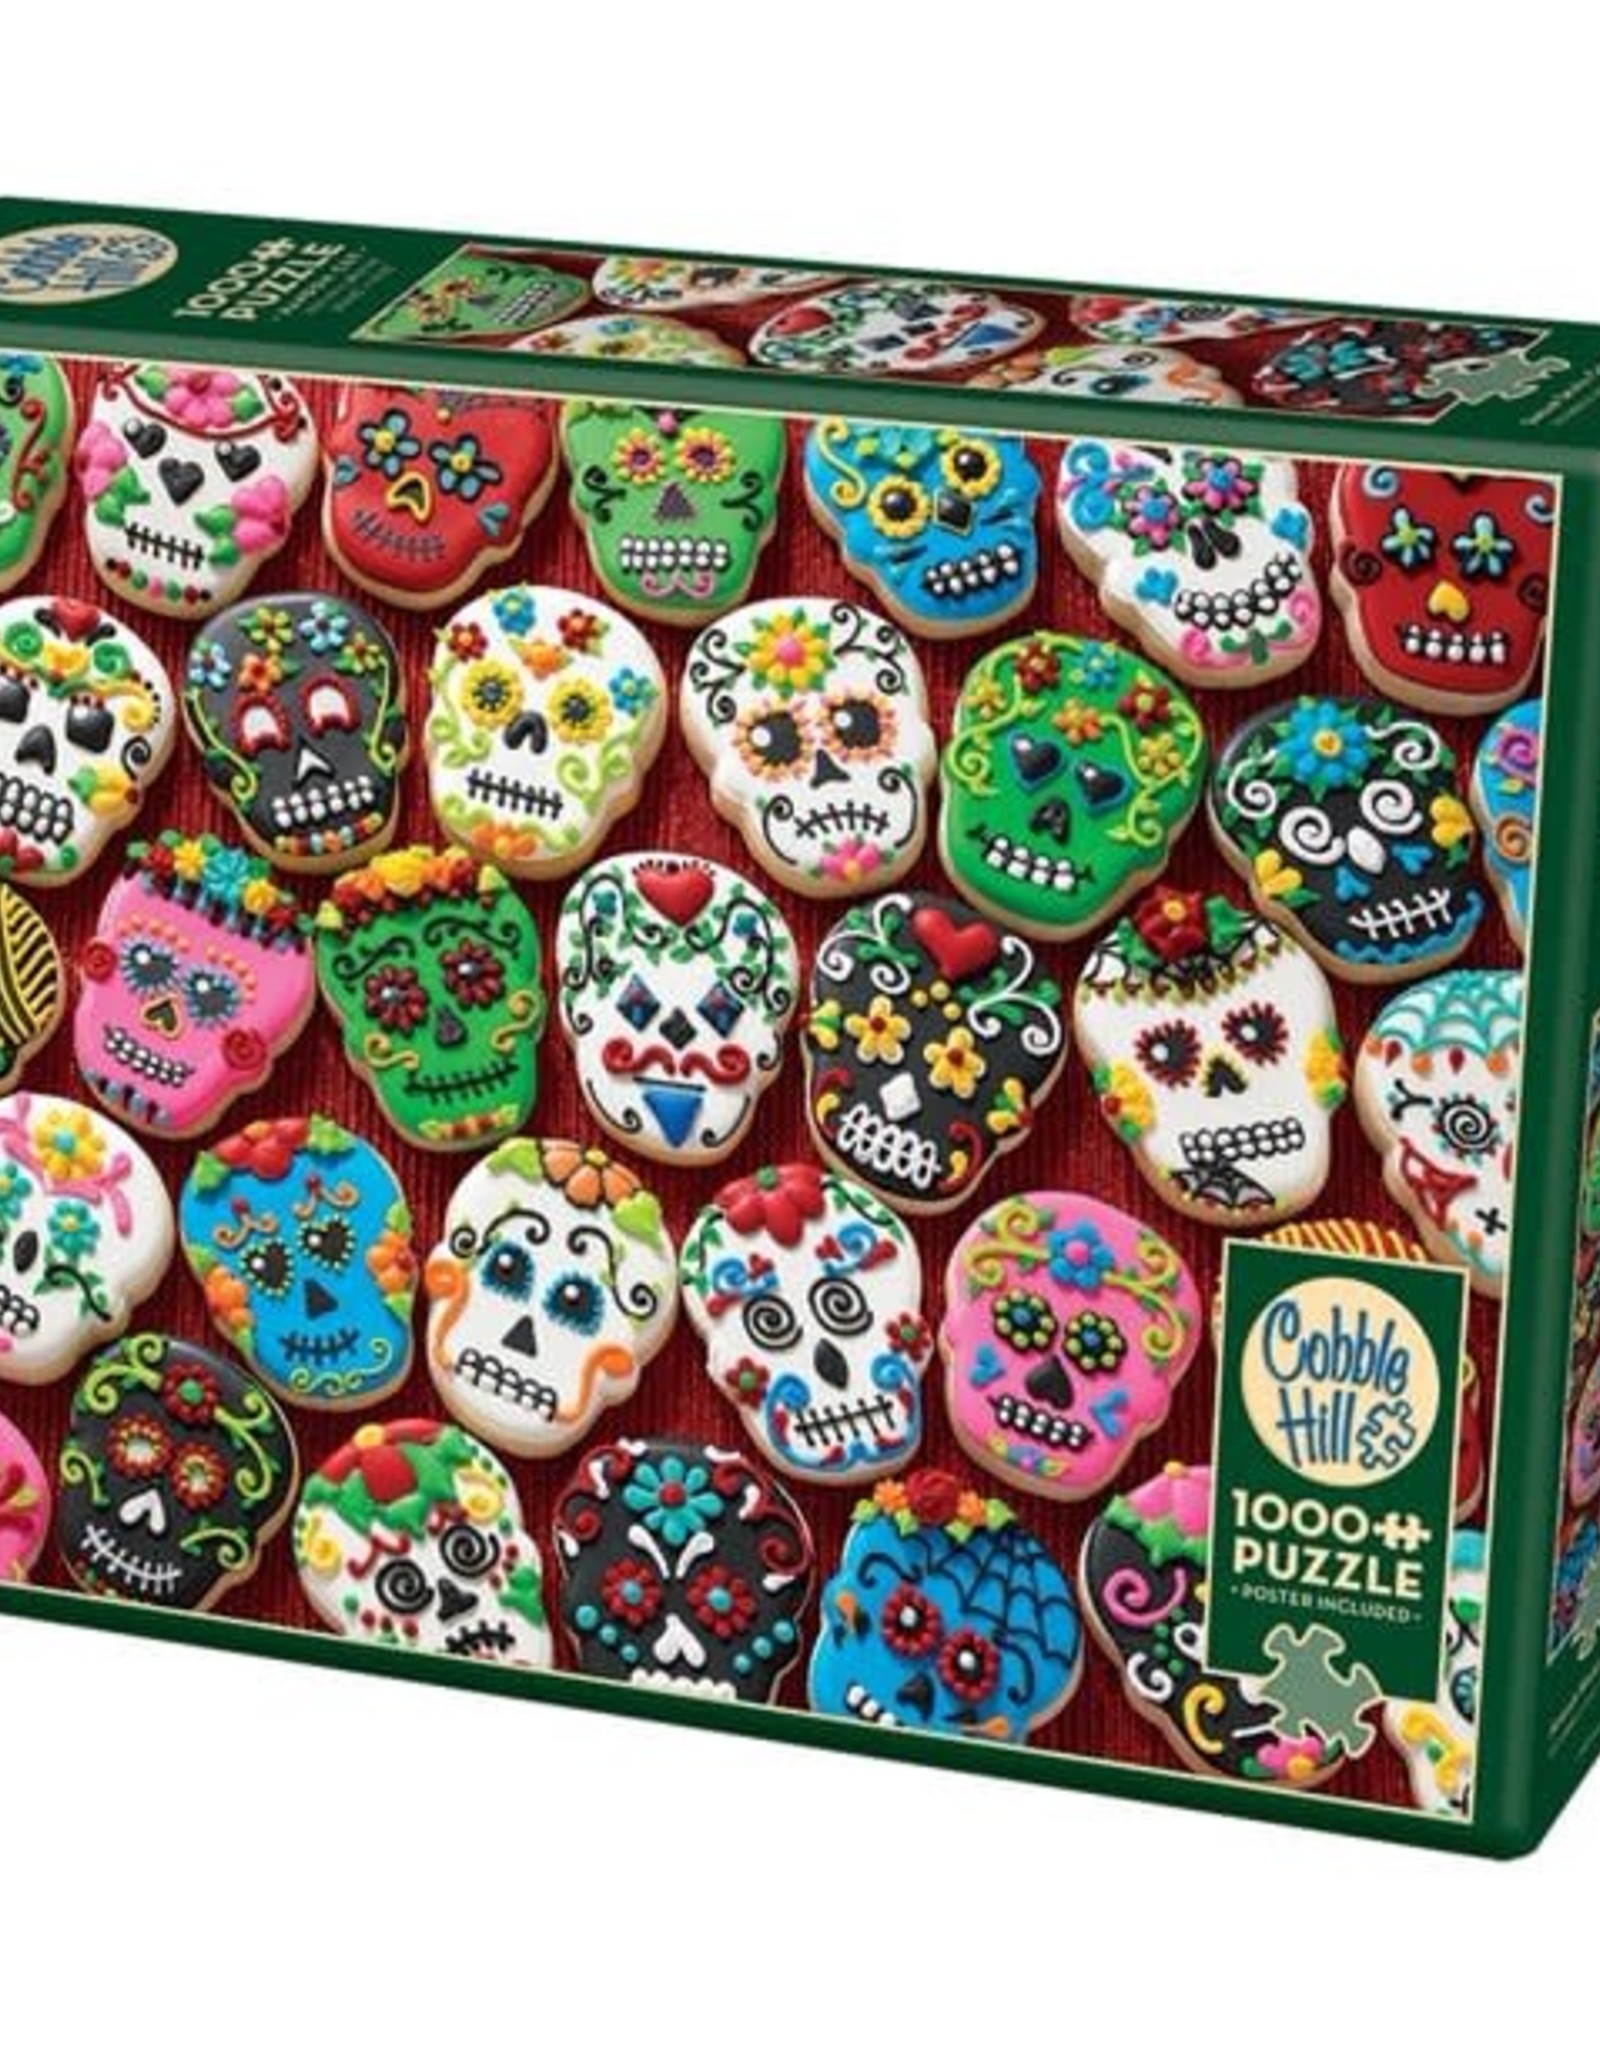 Cobble Hill Sugar Skull Cookies 1000 Piece Puzzle